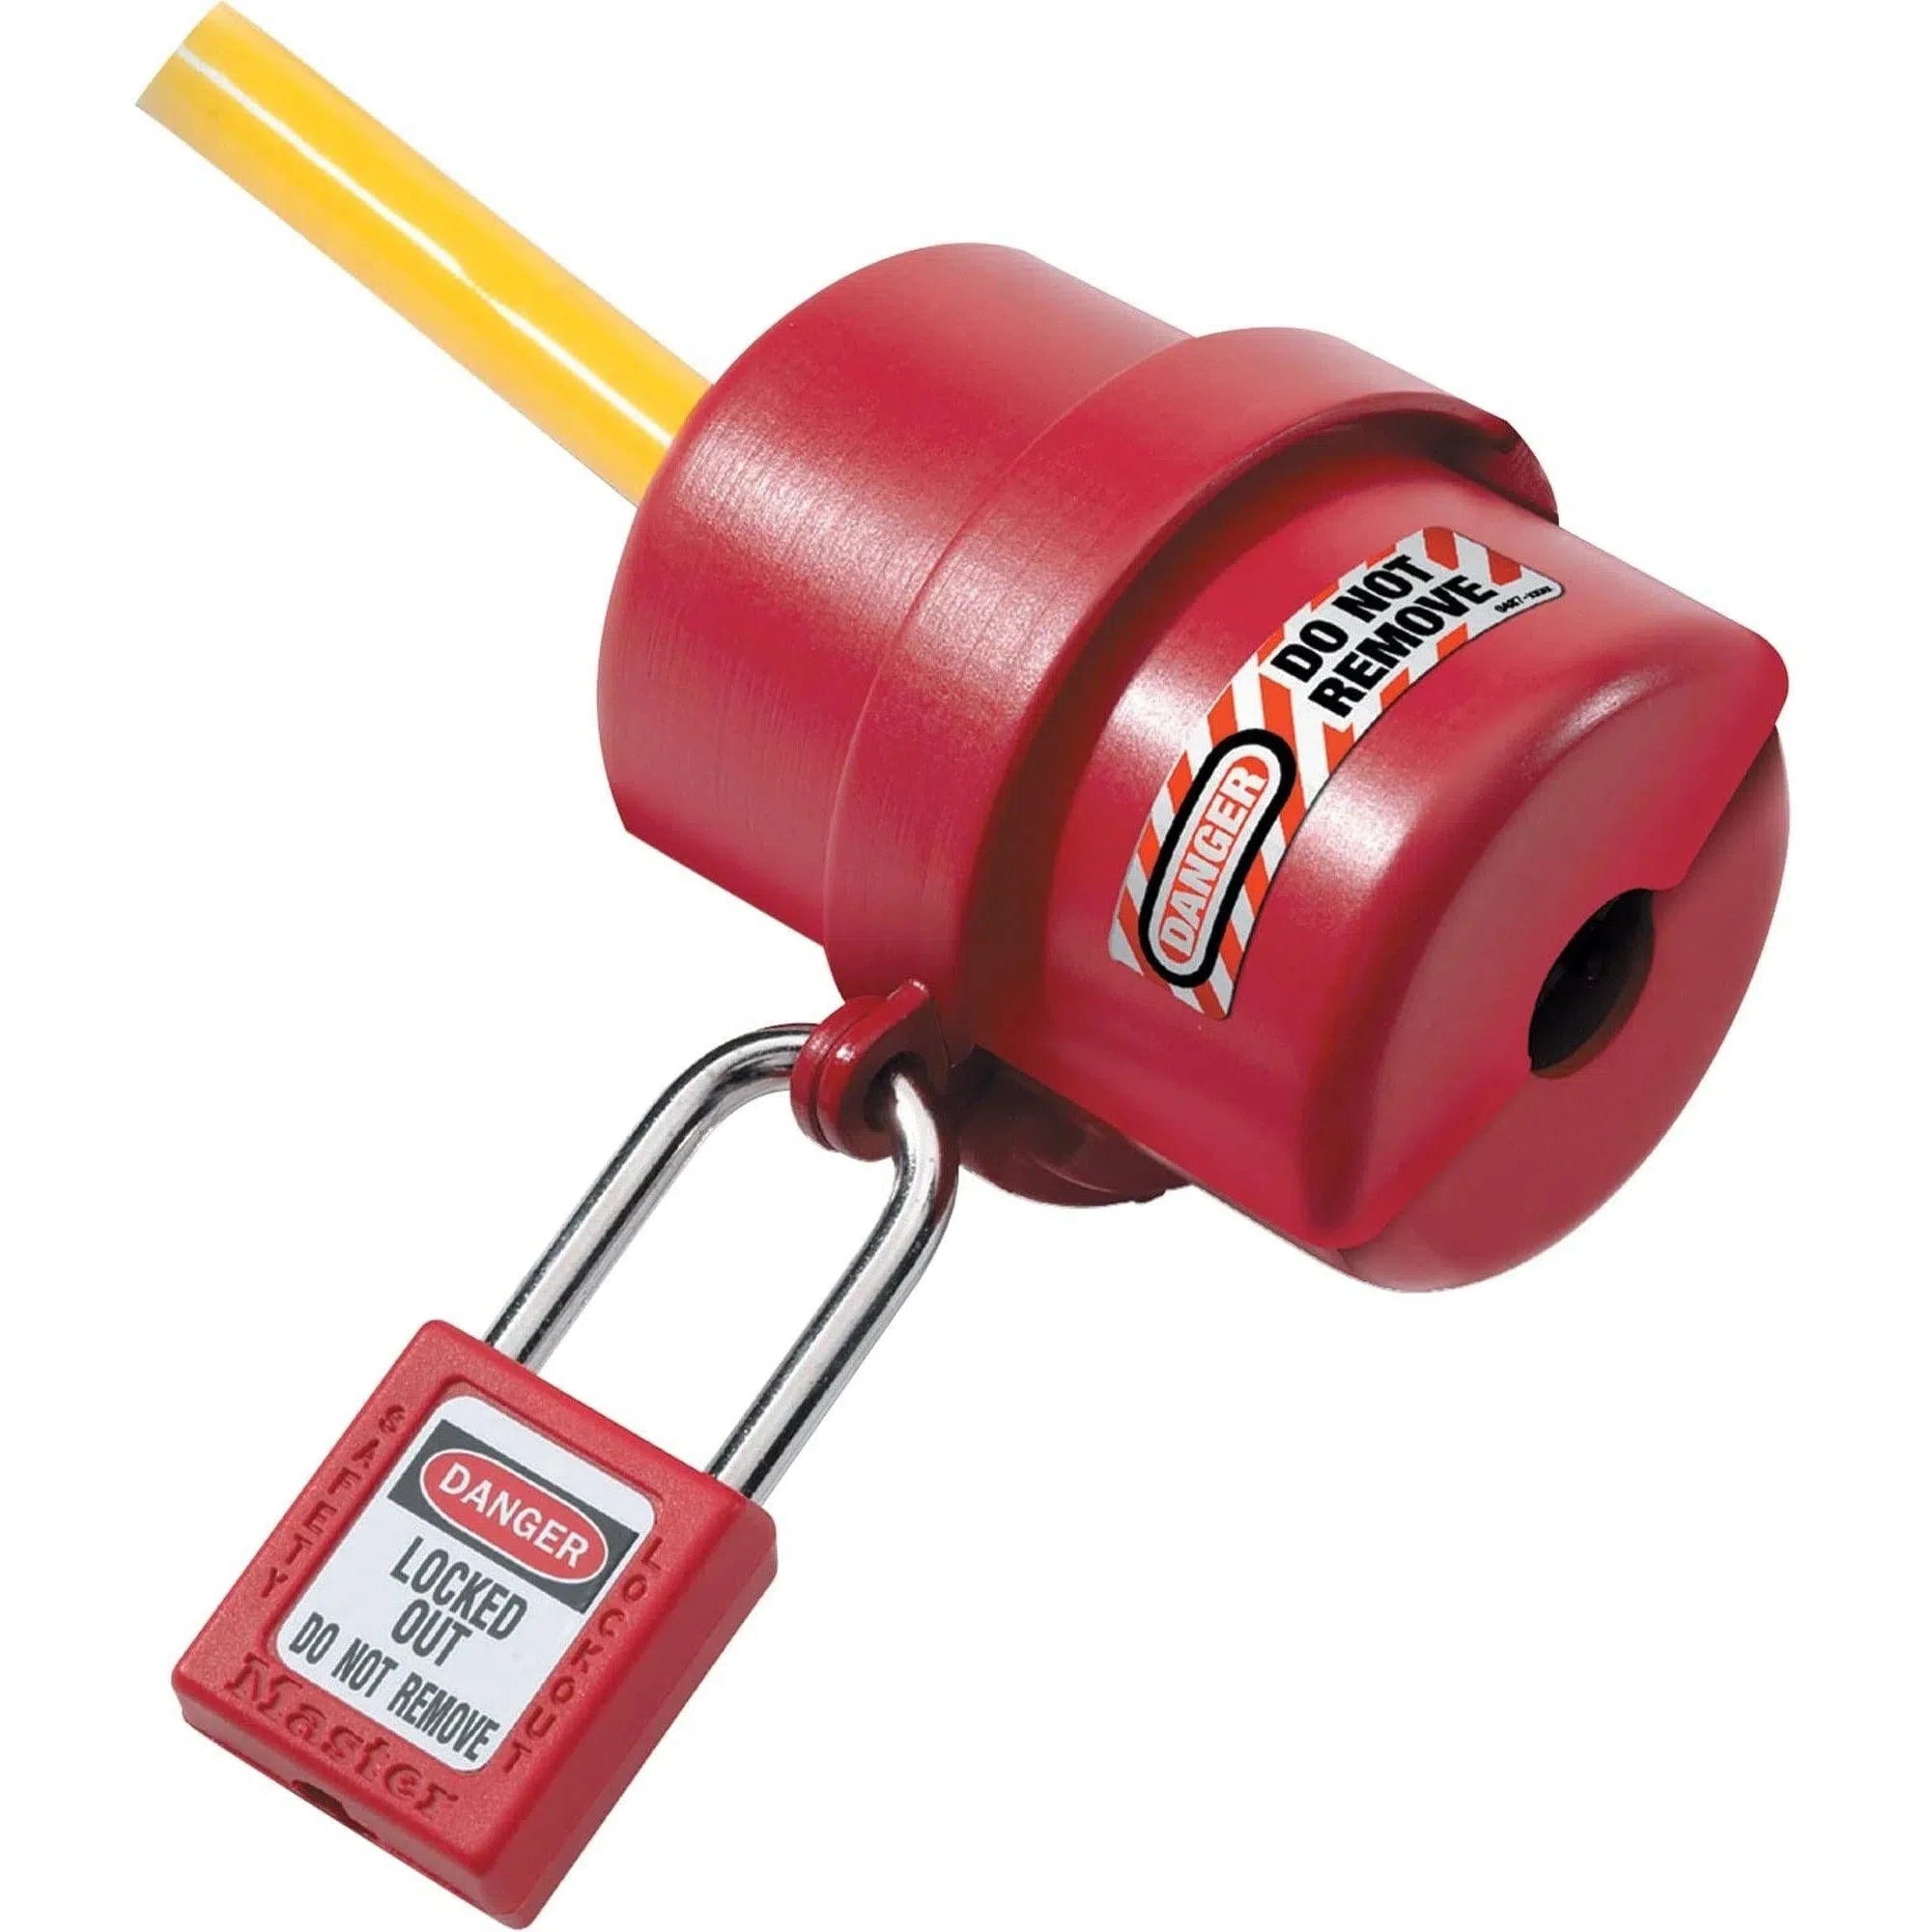 Rotary locking device for plug